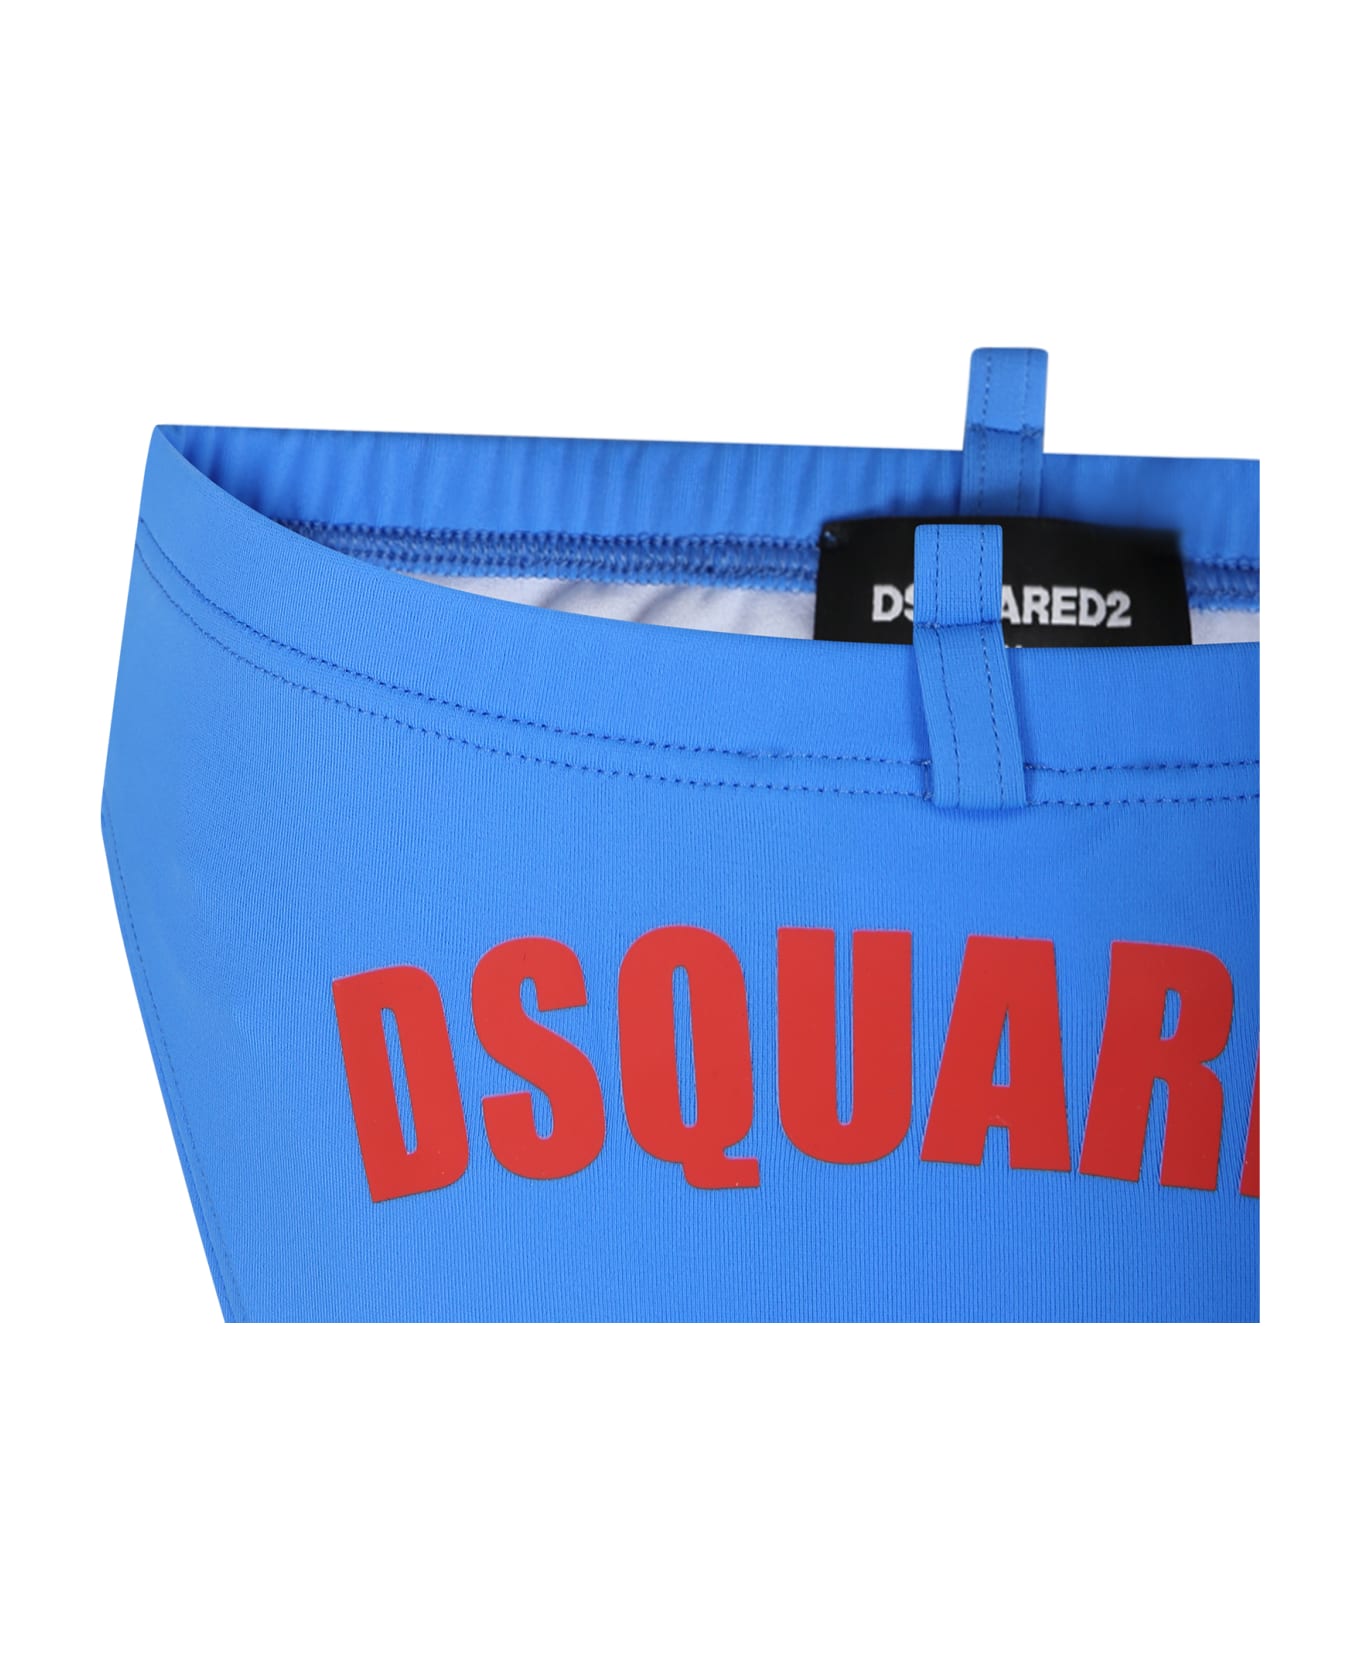 Dsquared2 Light Blue Swim Briefs For Boy With Logo - Light Blue